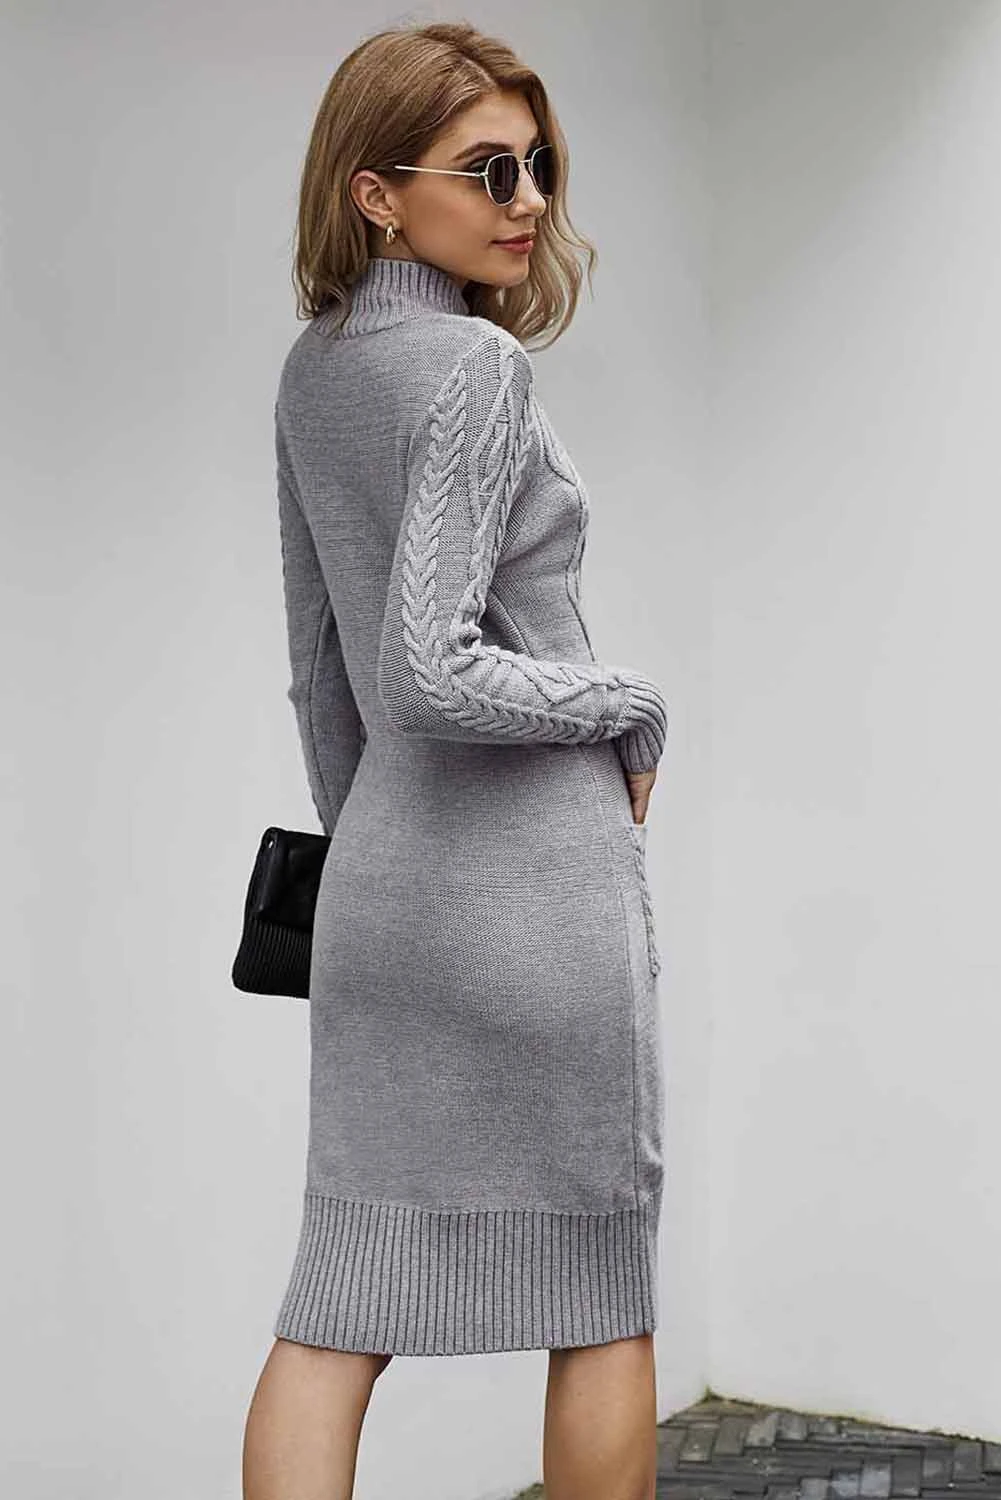 Fashionable Winter elegant warm long sleeve Textured Mini Bodycon Kniting Ribbed turtleneck sweater dress women